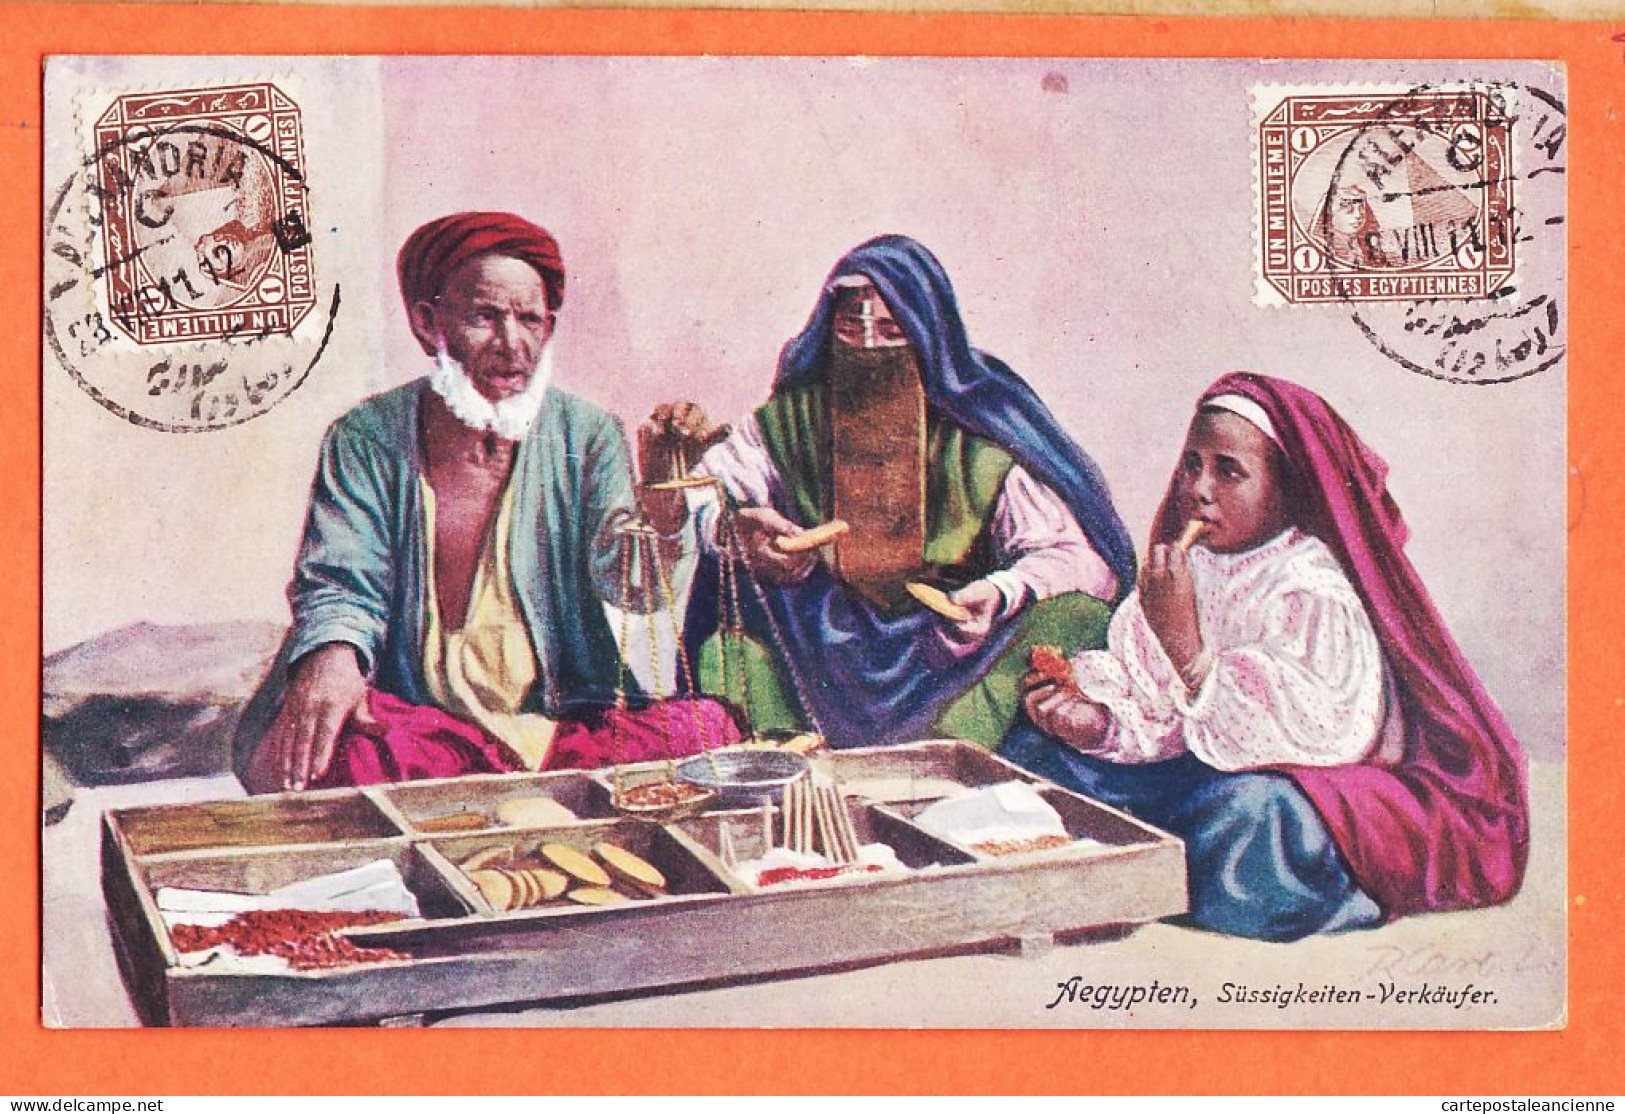 38955 / ⭐ AEGYPTEN Süssigkeiten Verkaufer ◉ EGYPTE Vendeur Friandises 1911 à Jeanne LEVECQUE Nanterre ◉ WANDERER 1336 - Personen